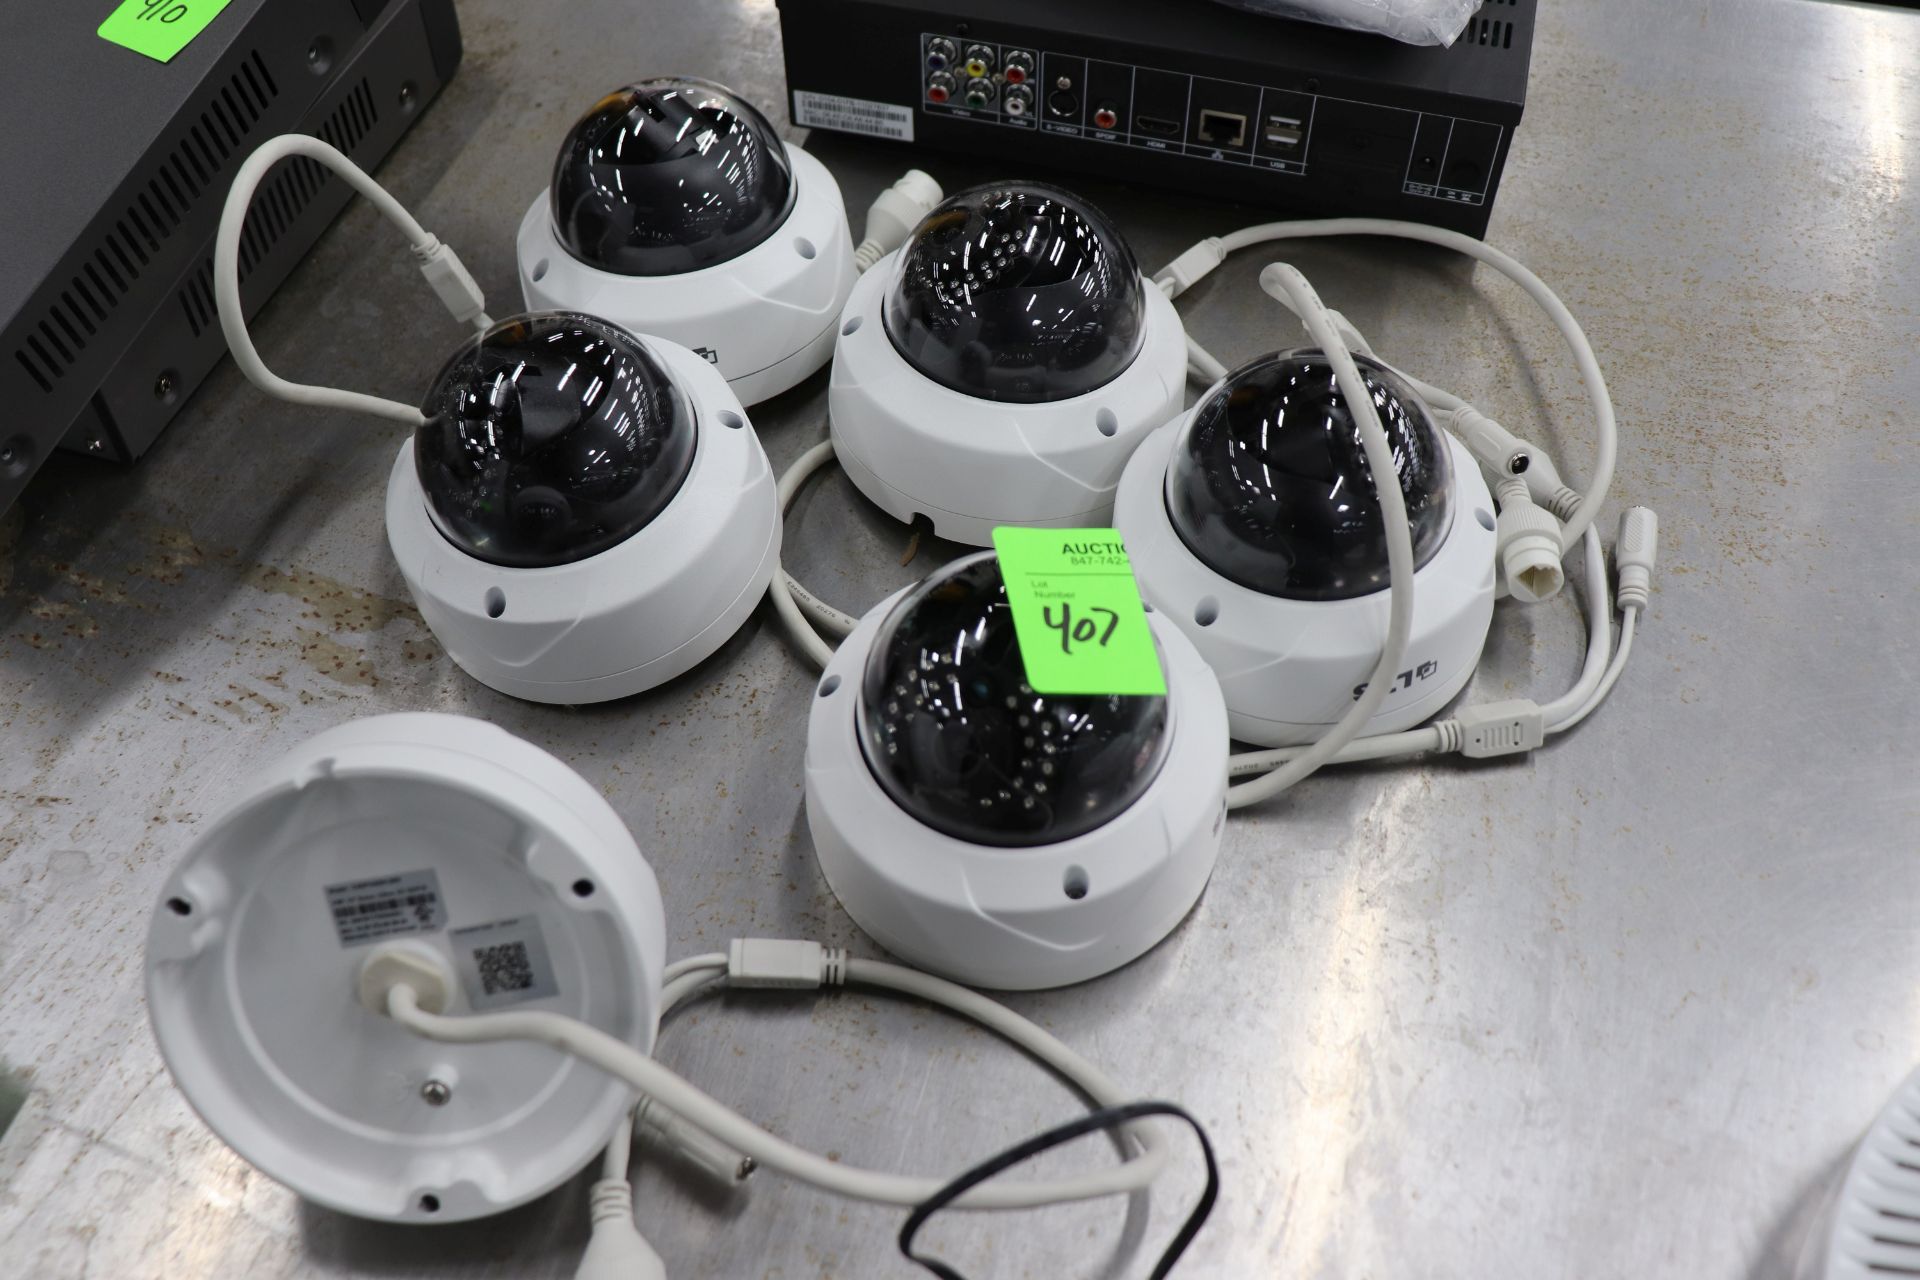 Six security cameras, model CMIP7442W-28M